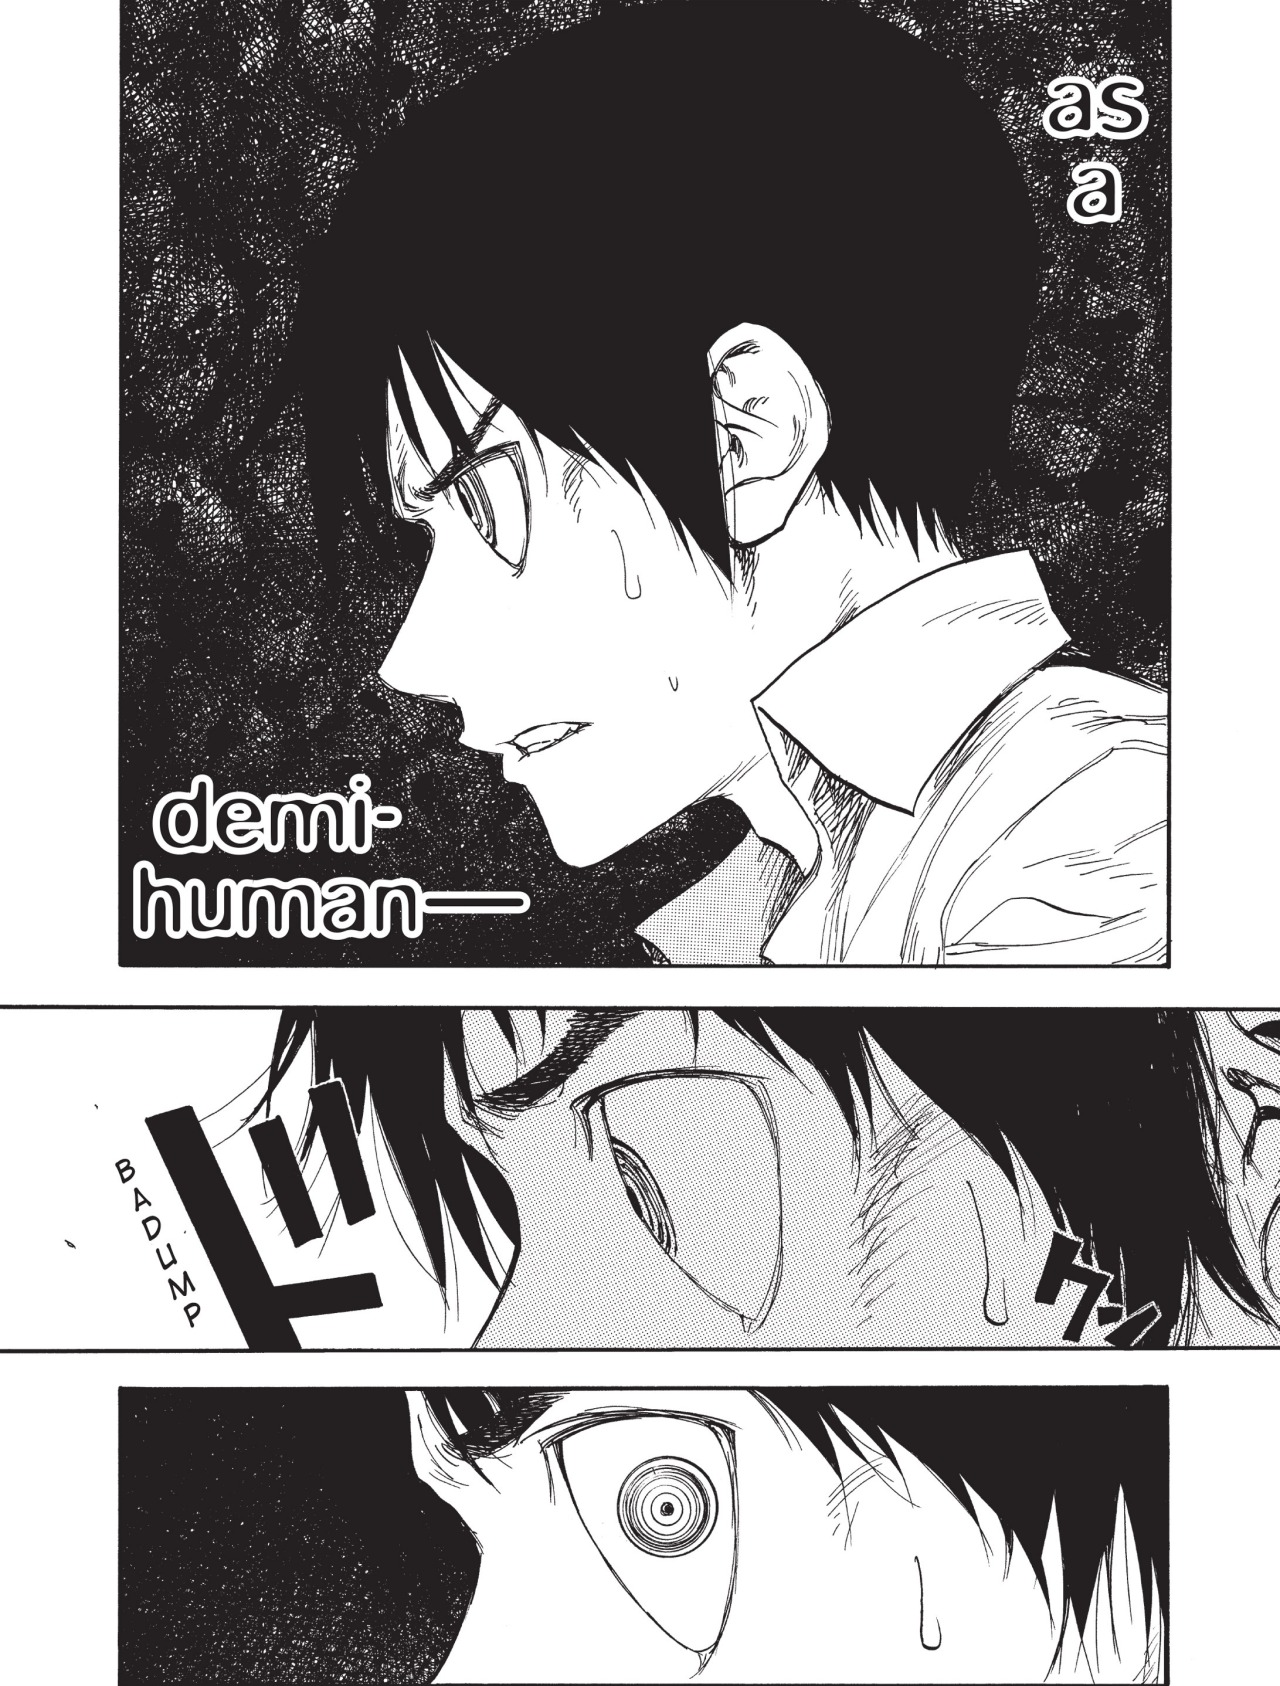 Cool Manga Panels or Pages I found on X: Ajin by Gamon Sakurai   / X